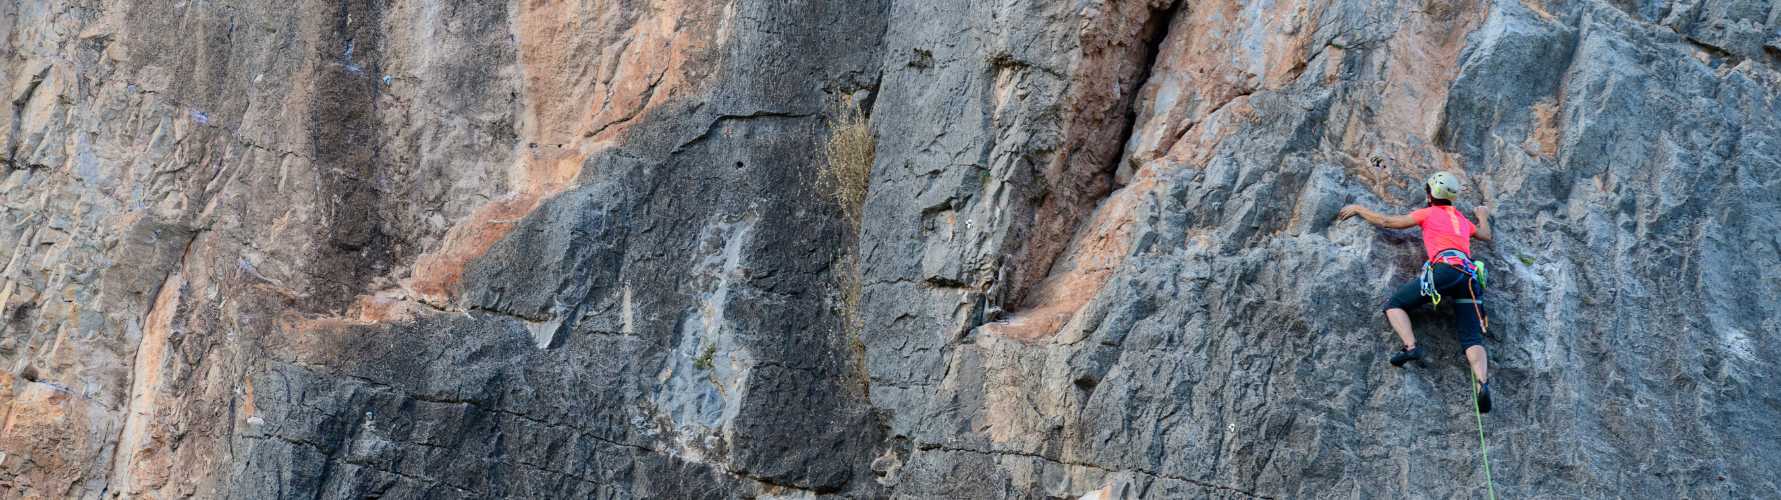 rock climbing in the region of valencia